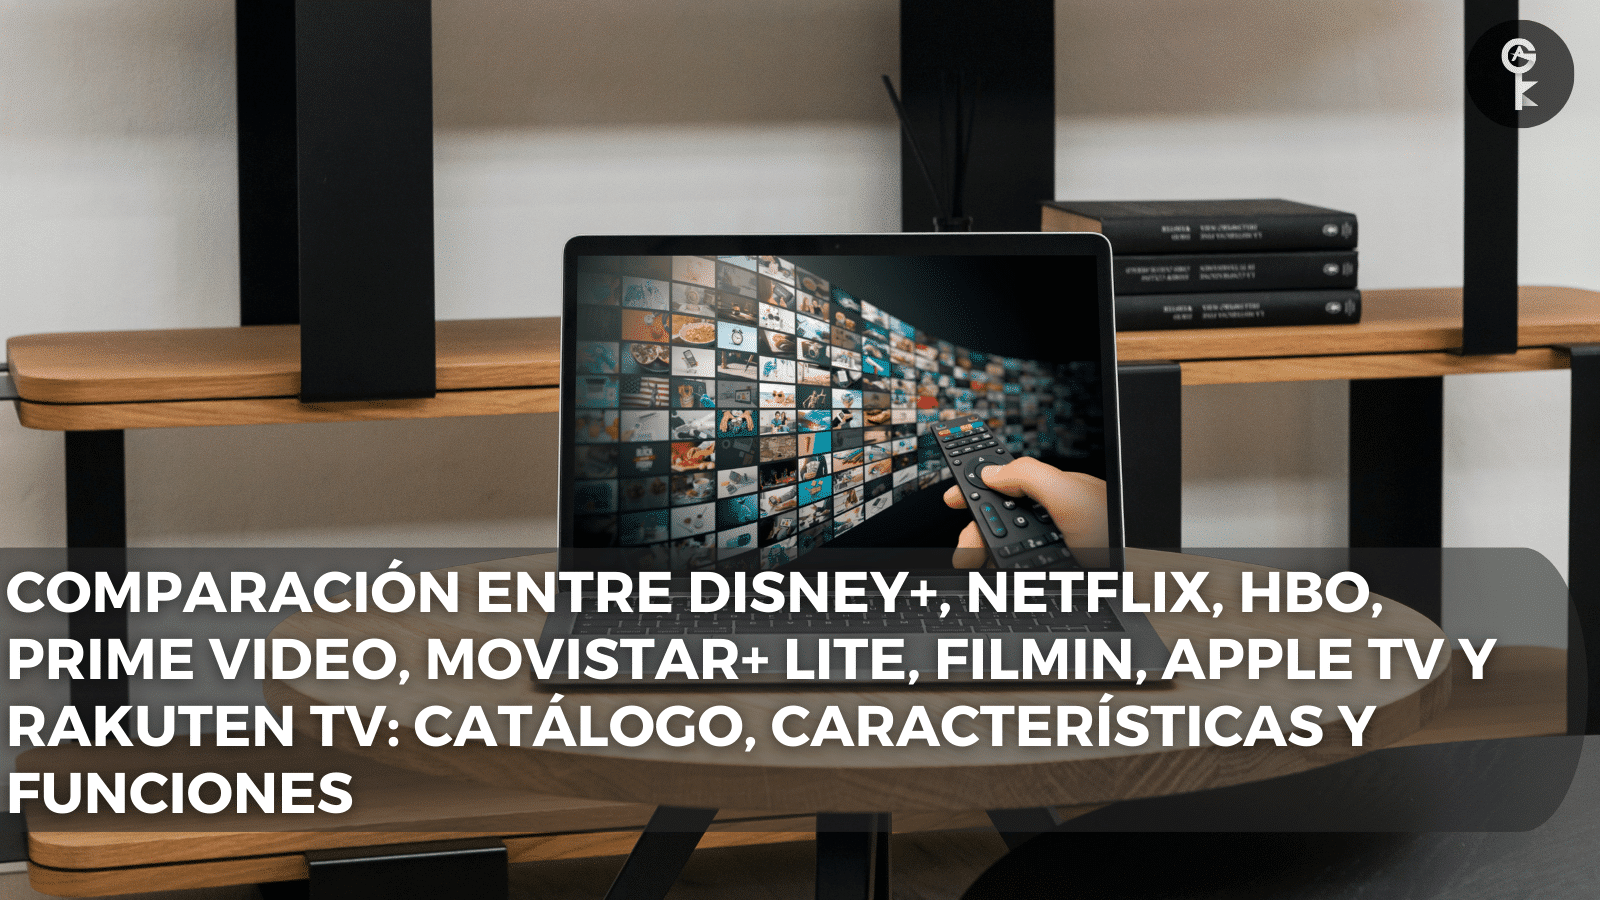 Disney+, Netflix, HBO, Prime Video, Movistar+ Lite, Filmin, Apple TV y Rakuten TV